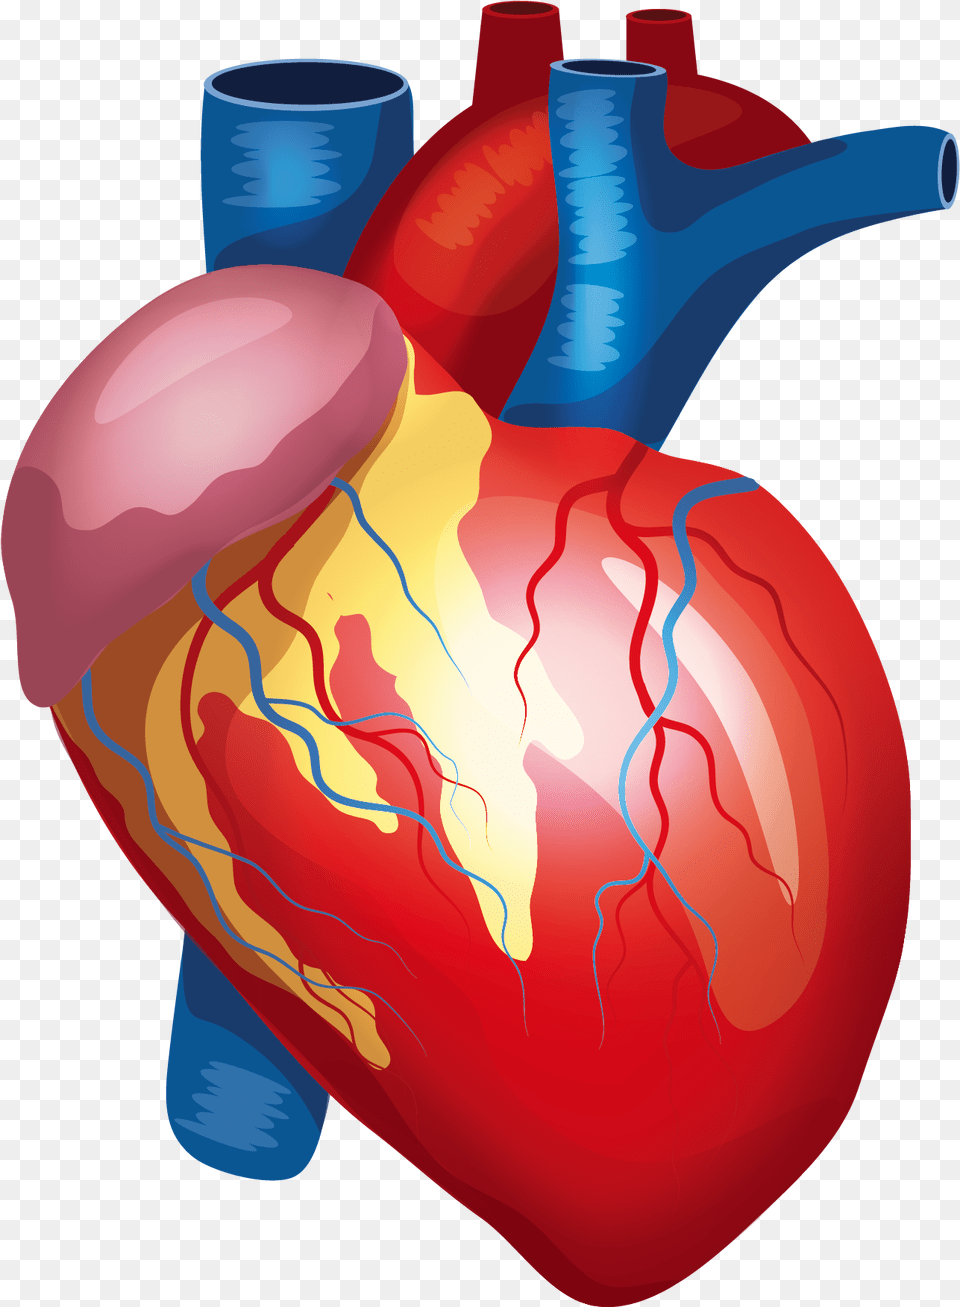 Download Anatomy Vector Human Heart Background Human Heart, Balloon, Food, Ketchup Free Transparent Png